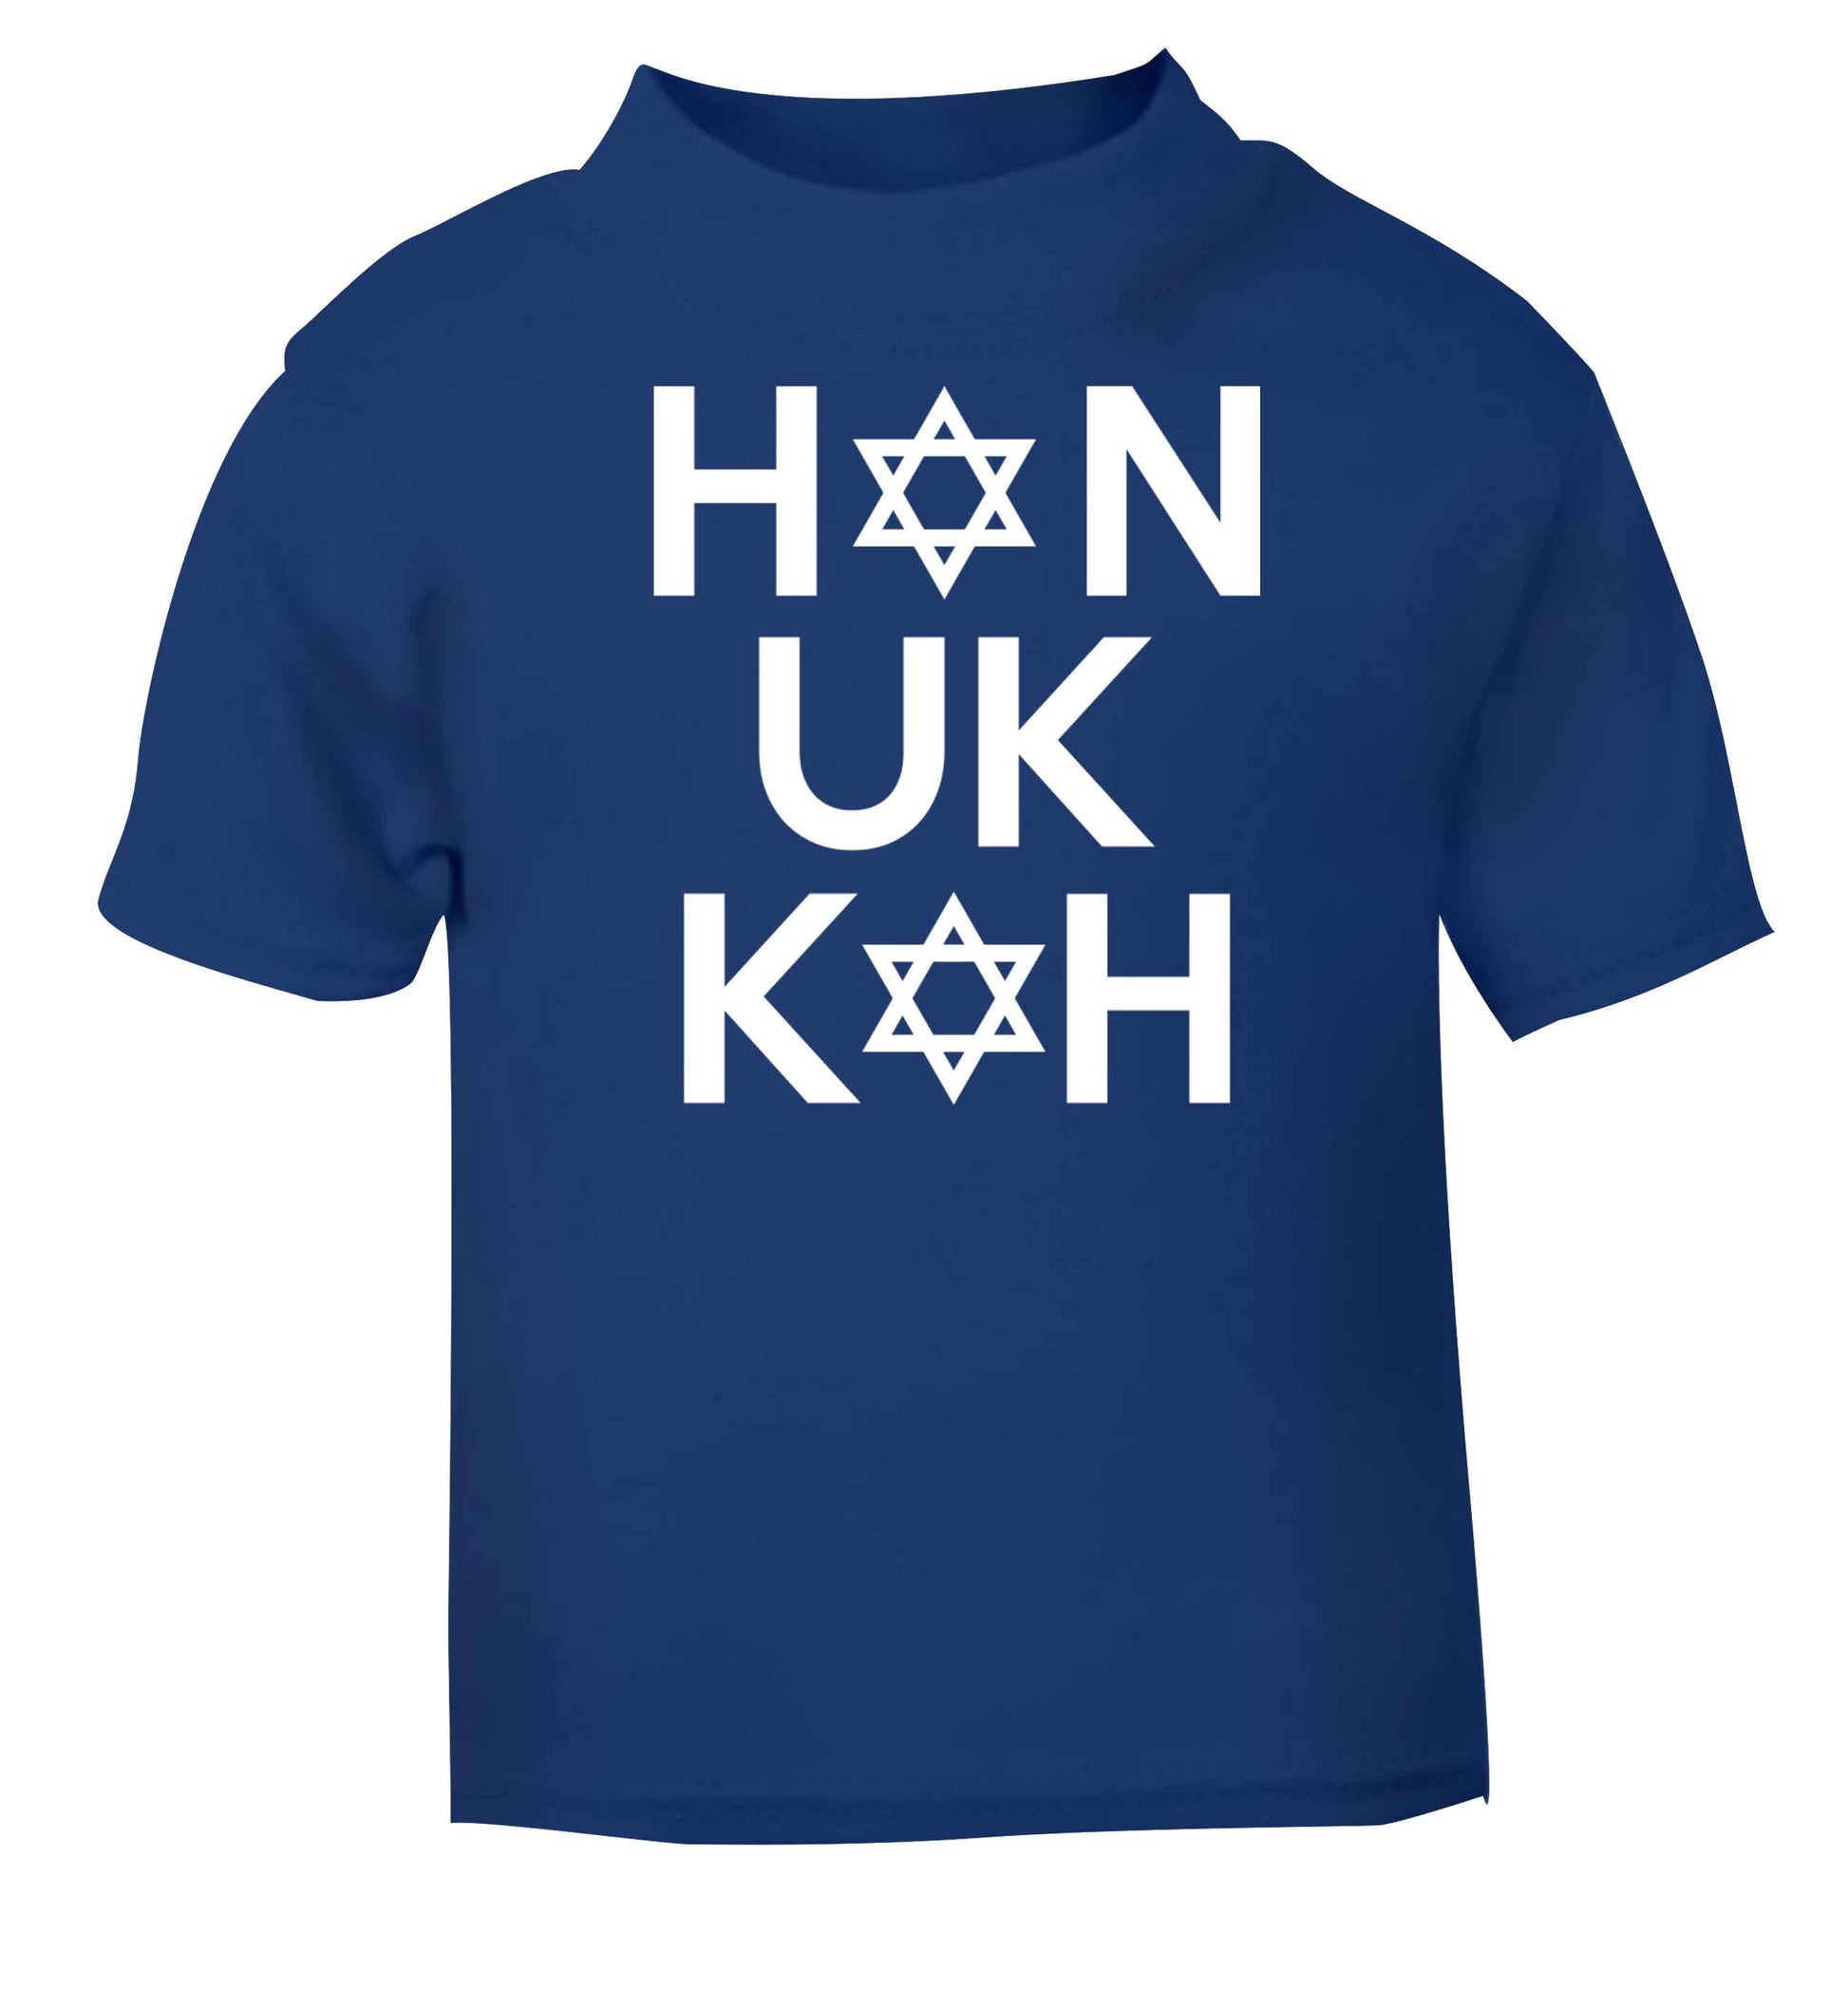 Han uk kah  Hanukkah star of david blue baby toddler Tshirt 2 Years